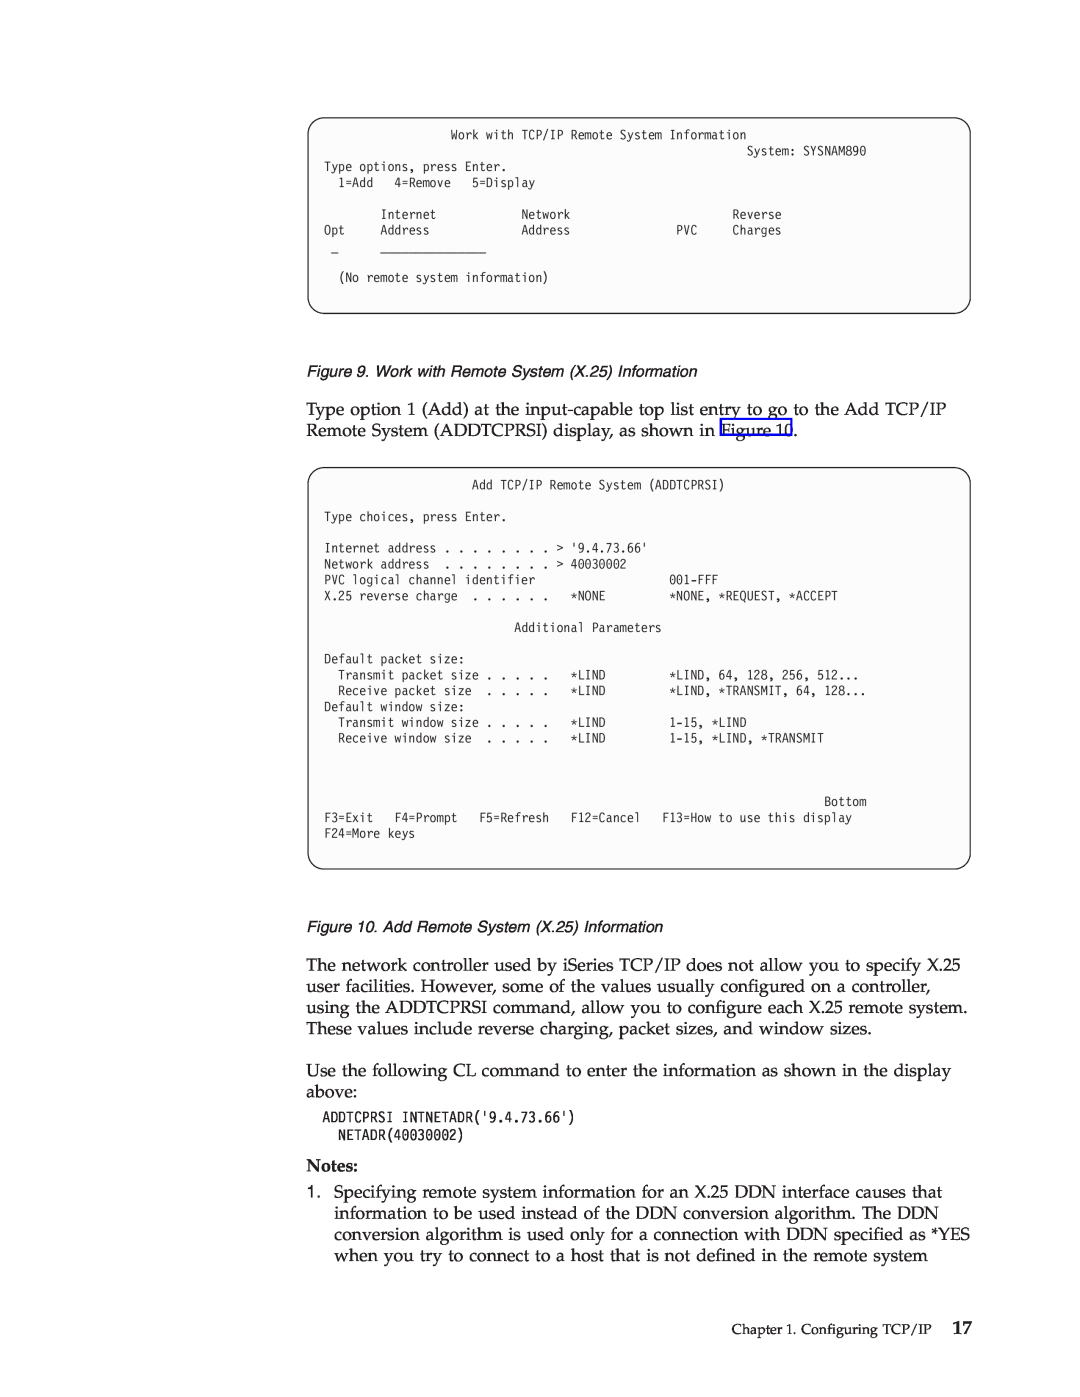 IBM SC41-5420-04 manual Notes, ADDTCPRSI INTNETADR9.4.73.66 NETADR40030002 